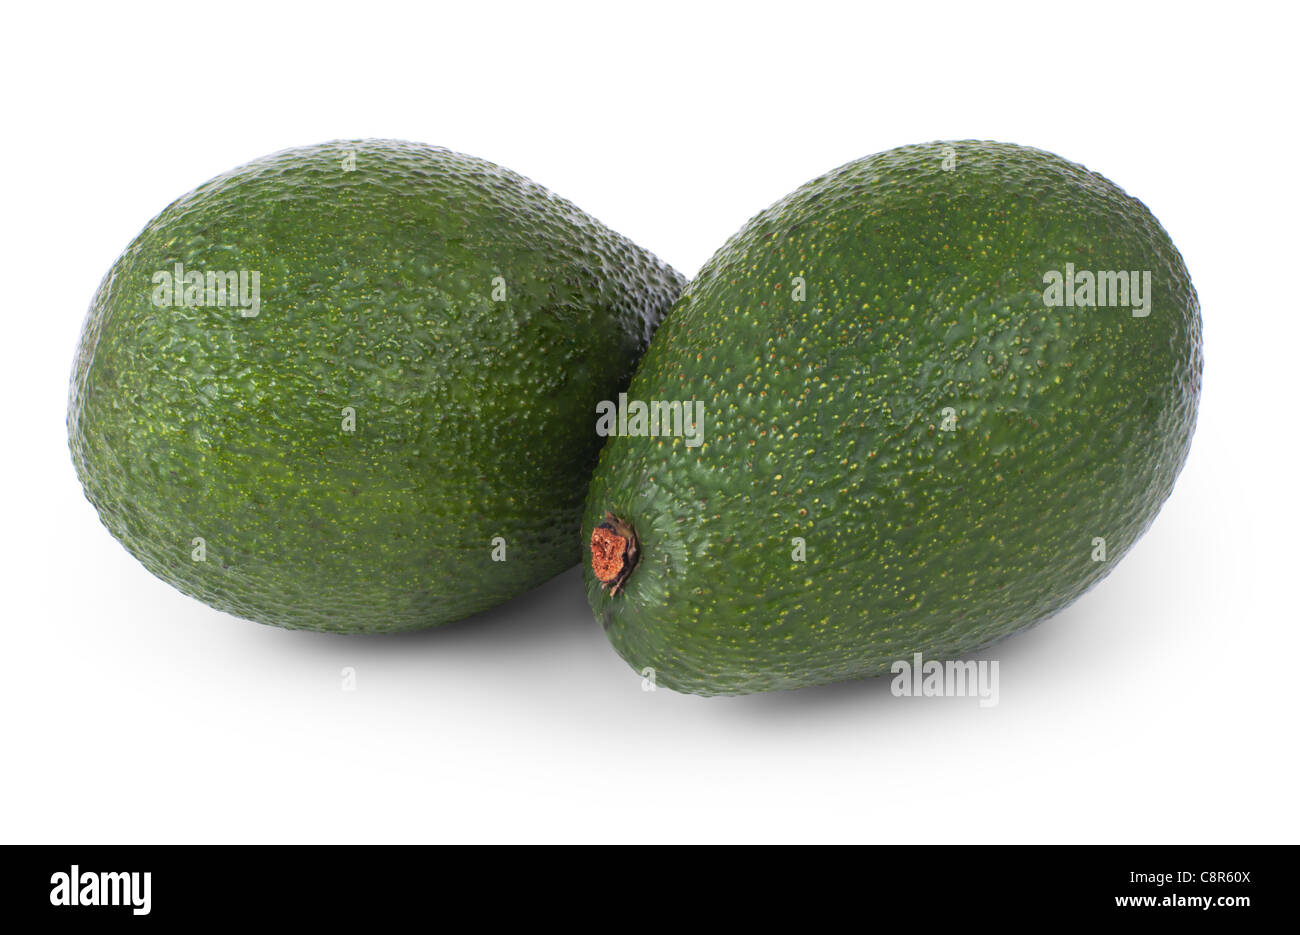 Two avocado isolated on white background Stock Photo